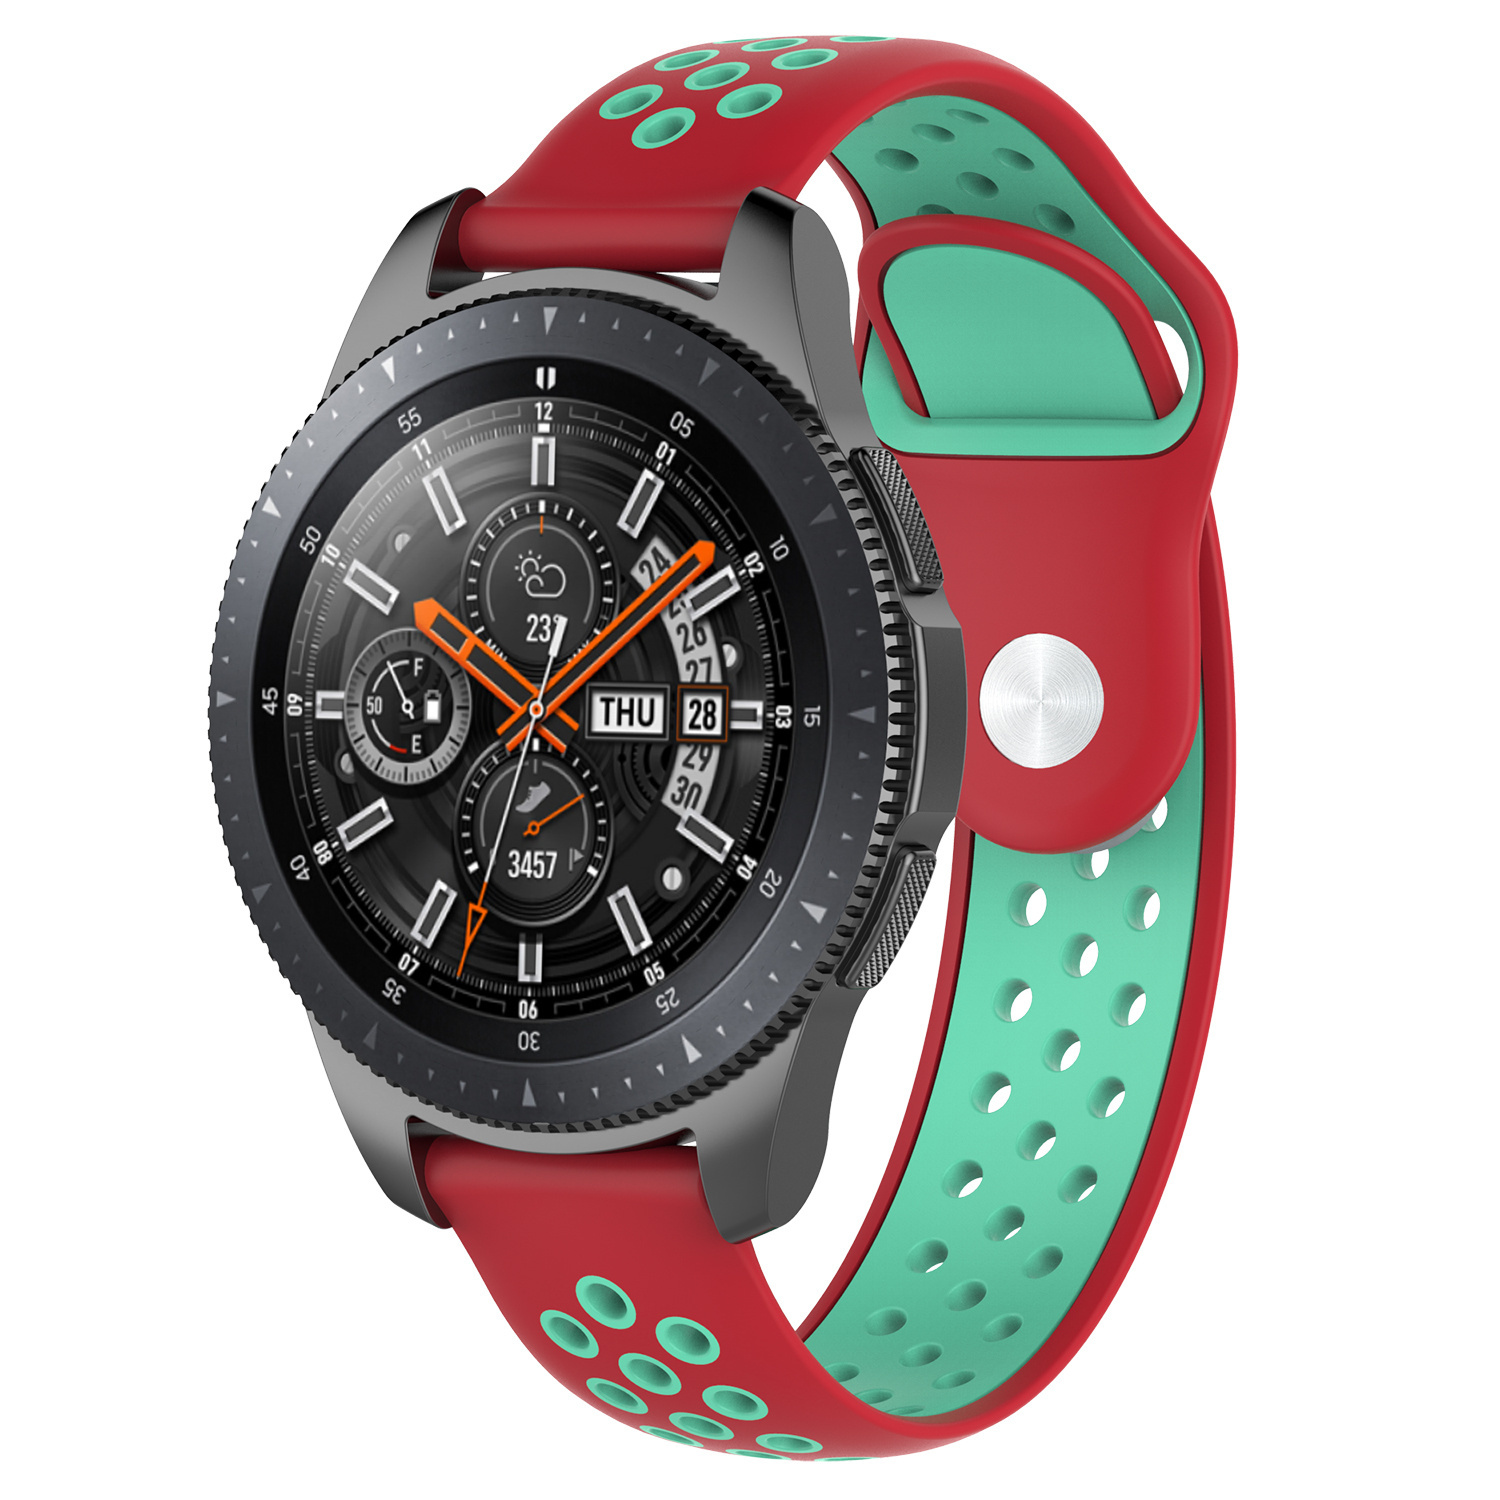 Cinturino doppio sport per Samsung Galaxy Watch - rosso verde acqua